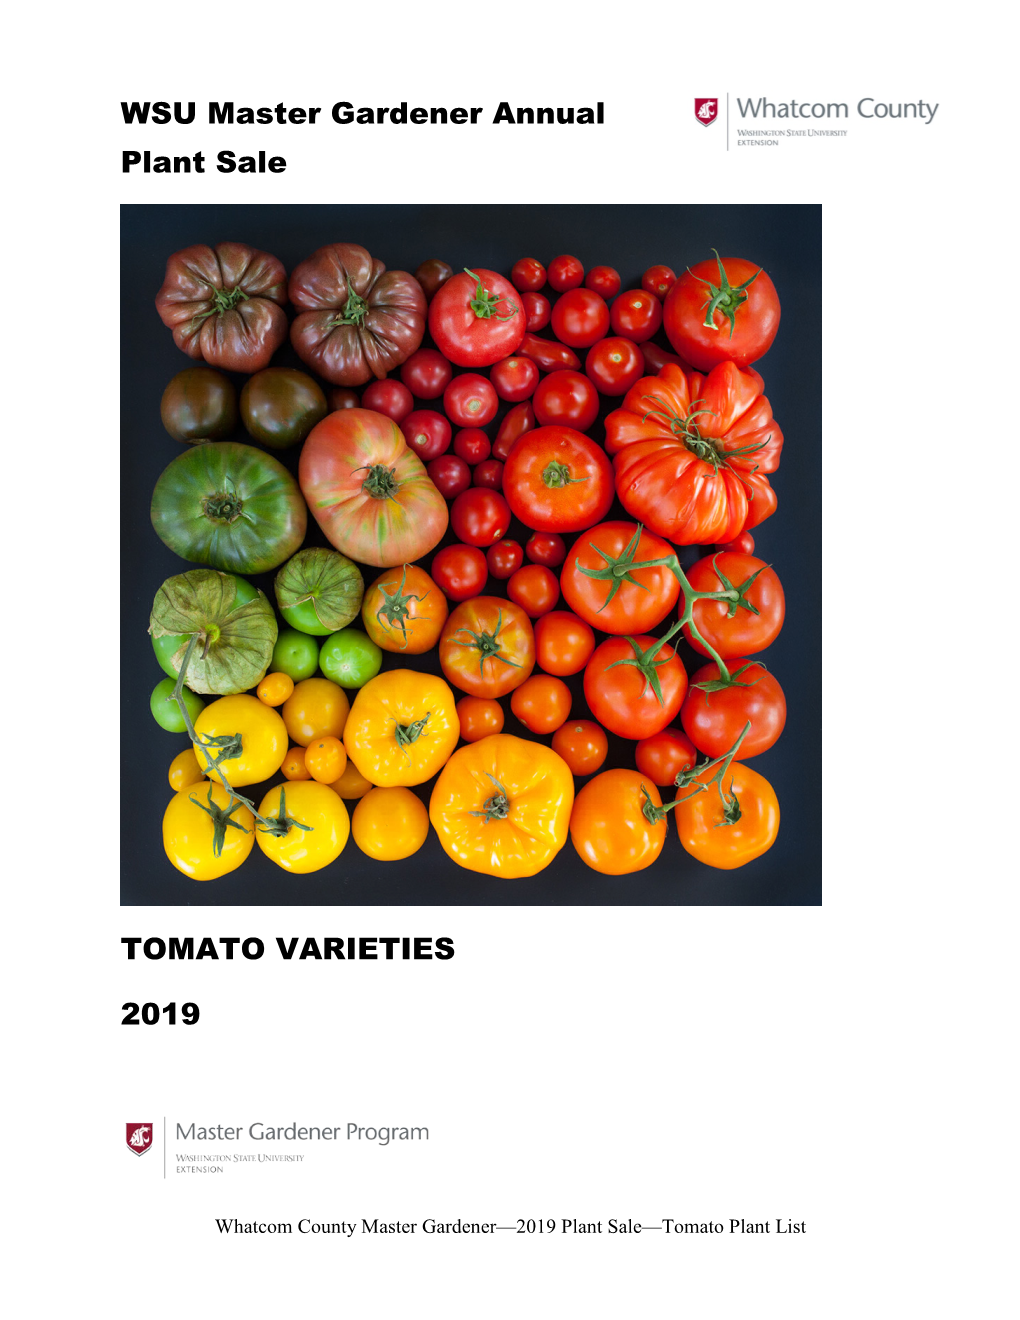 WSU Master Gardener Annual Plant Sale TOMATO VARIETIES 2019